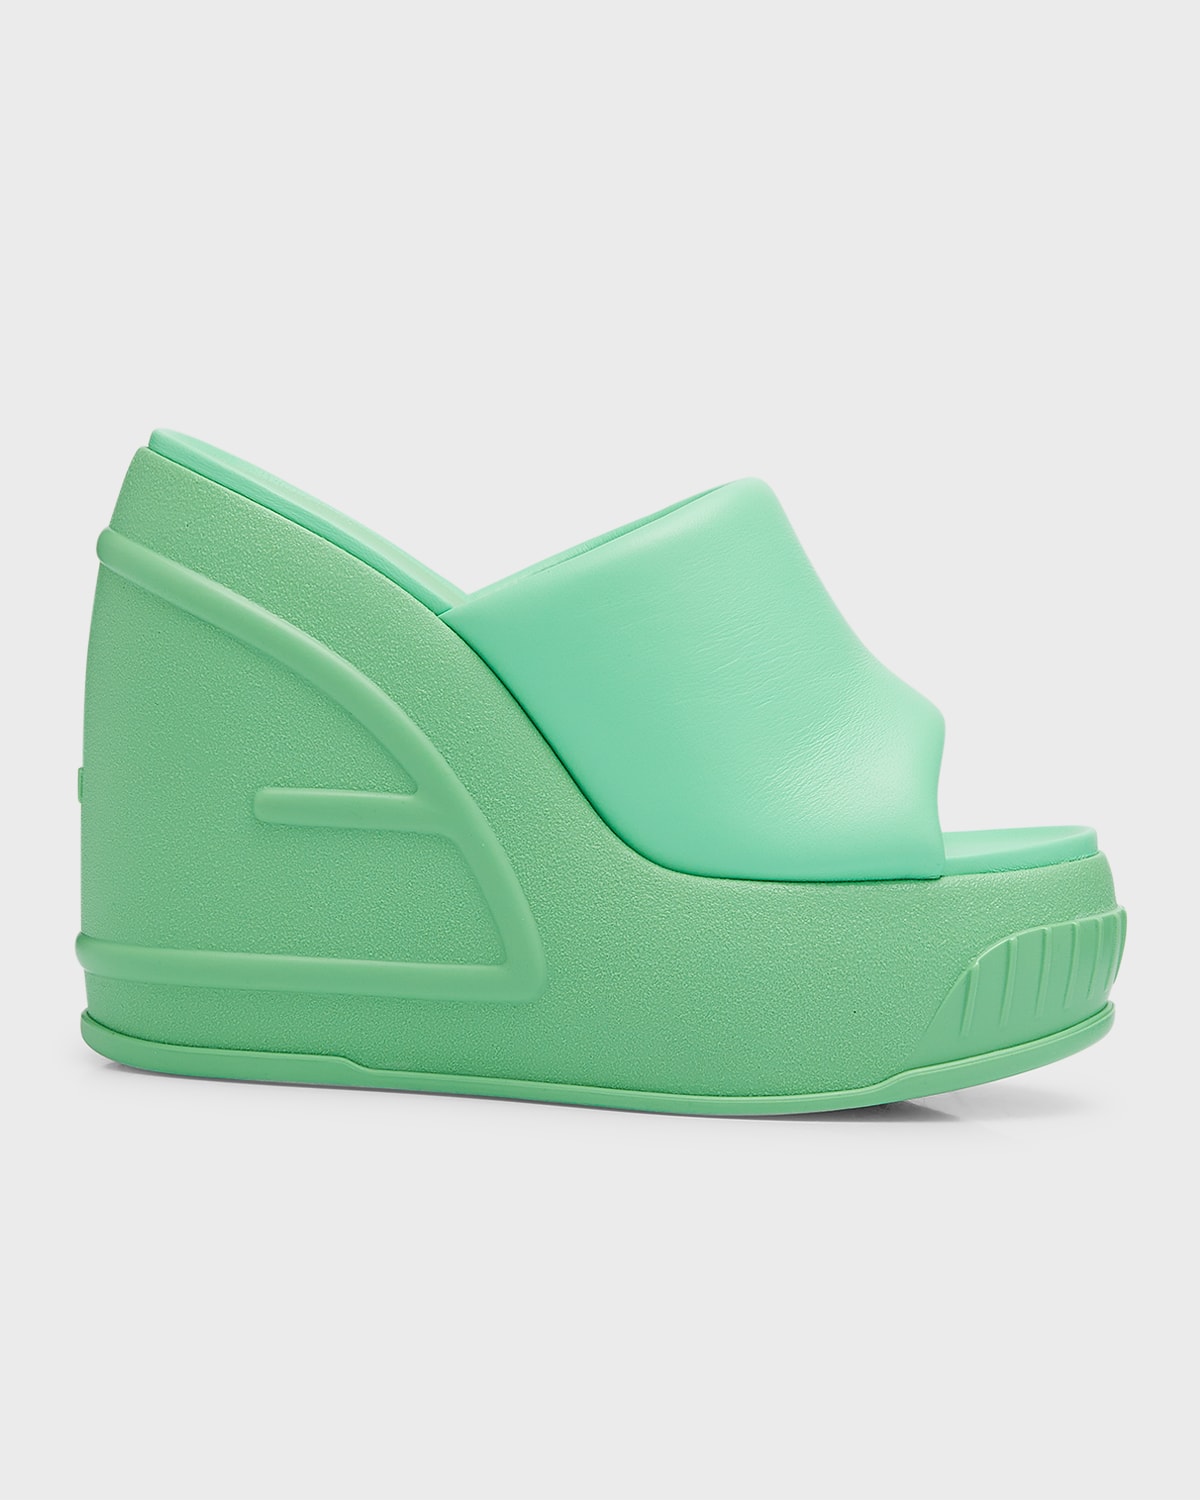 Miista Rhea Leather Platform Wedge Sandals | Neiman Marcus